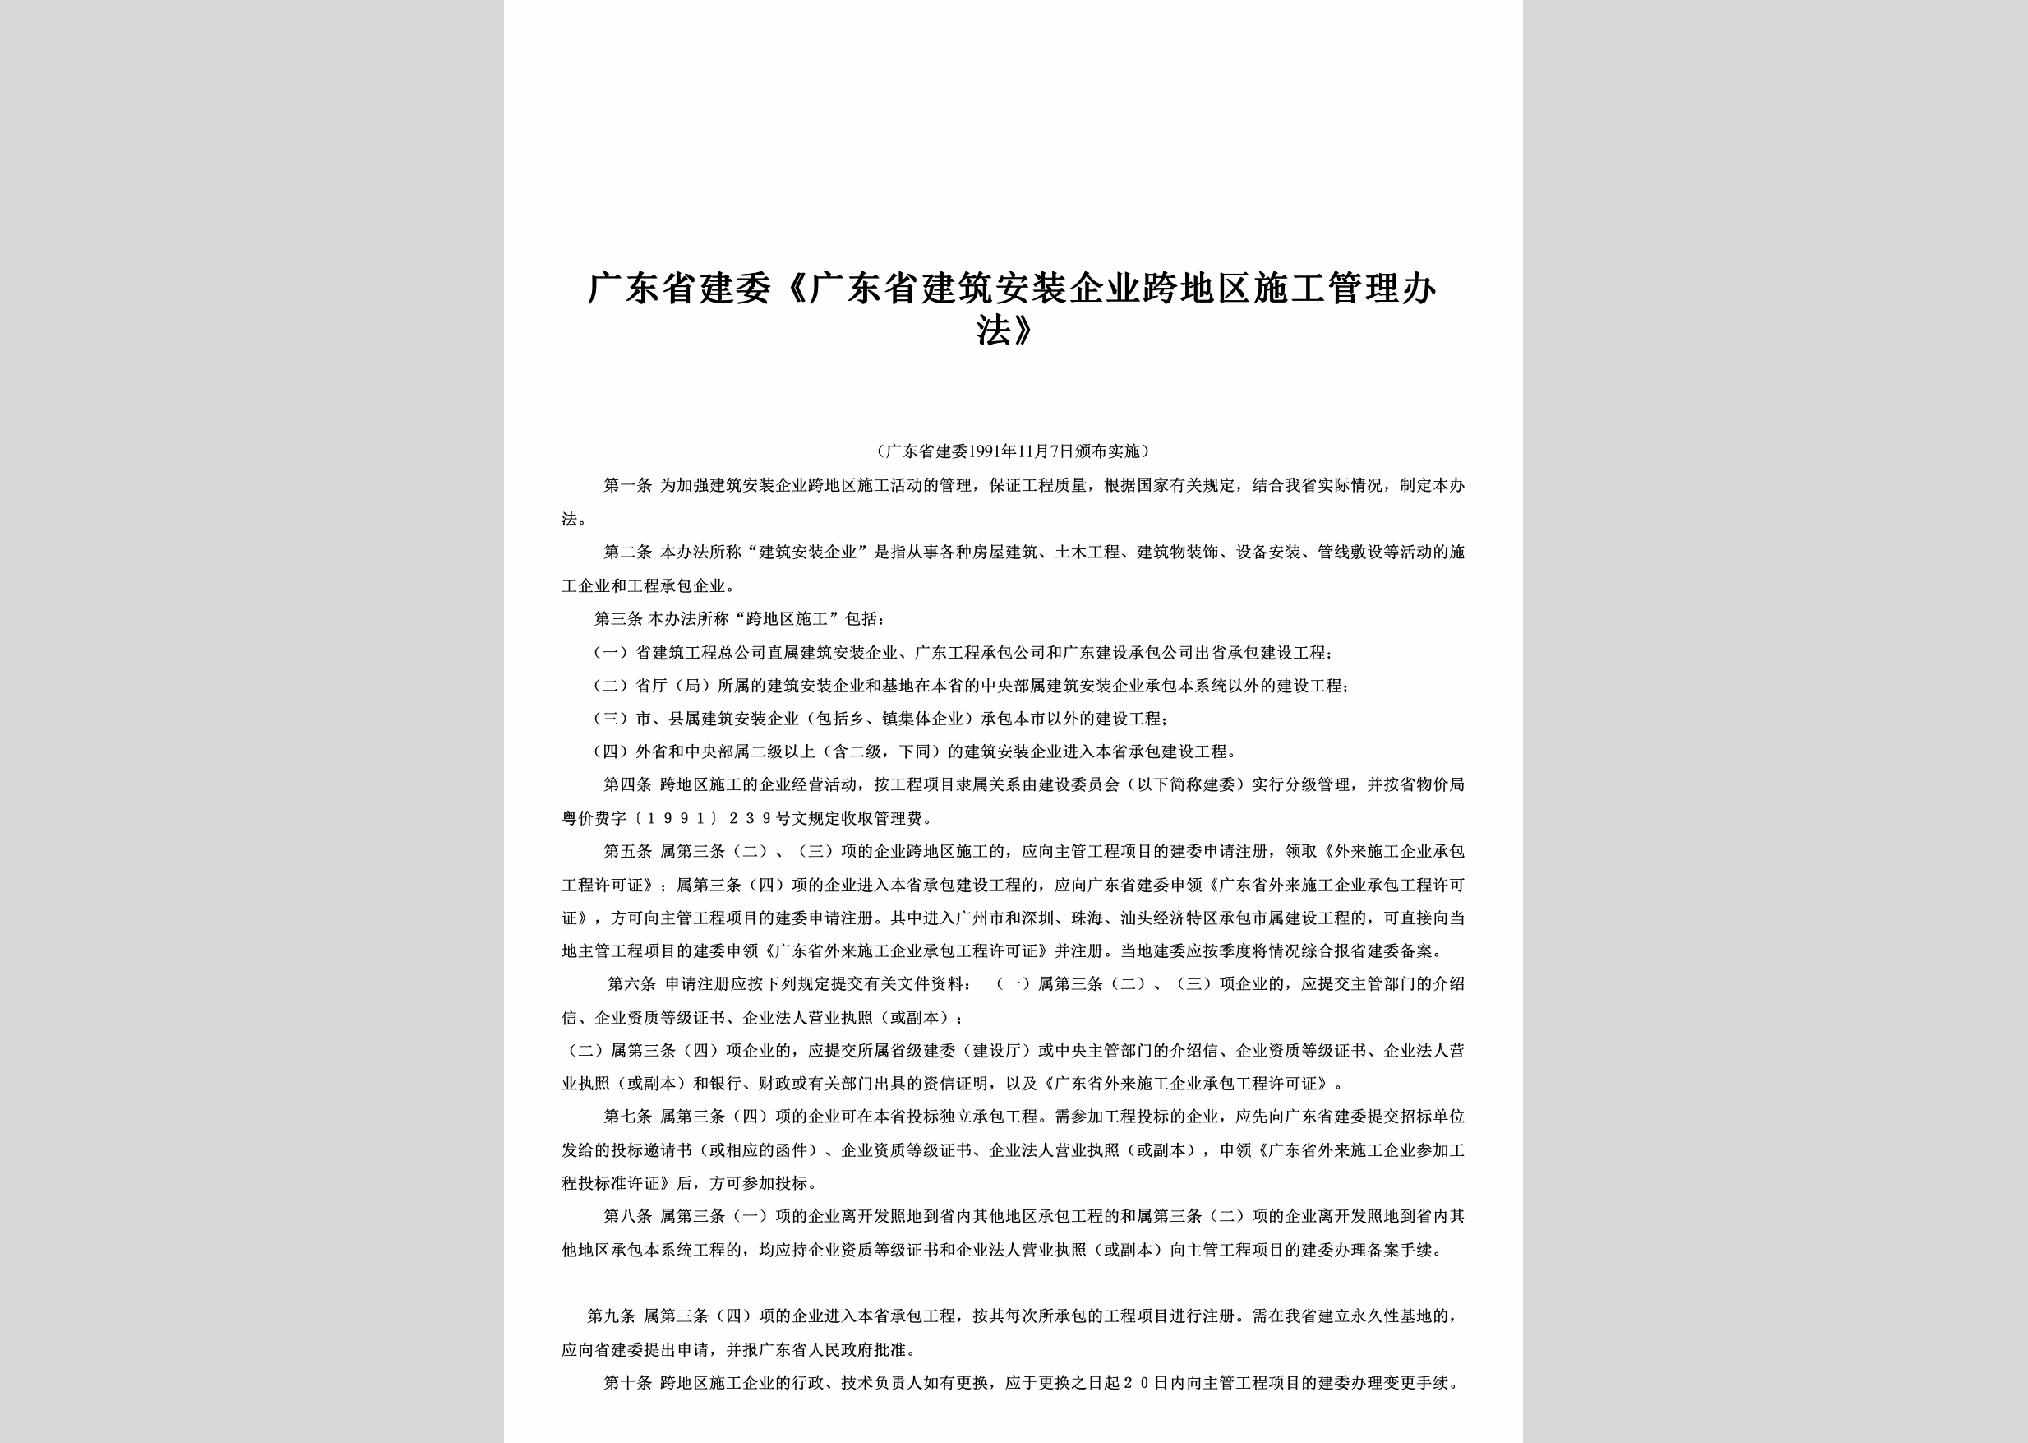 GD-JZQYSGBF-1991：《广东省建筑安装企业跨地区施工管理办法》